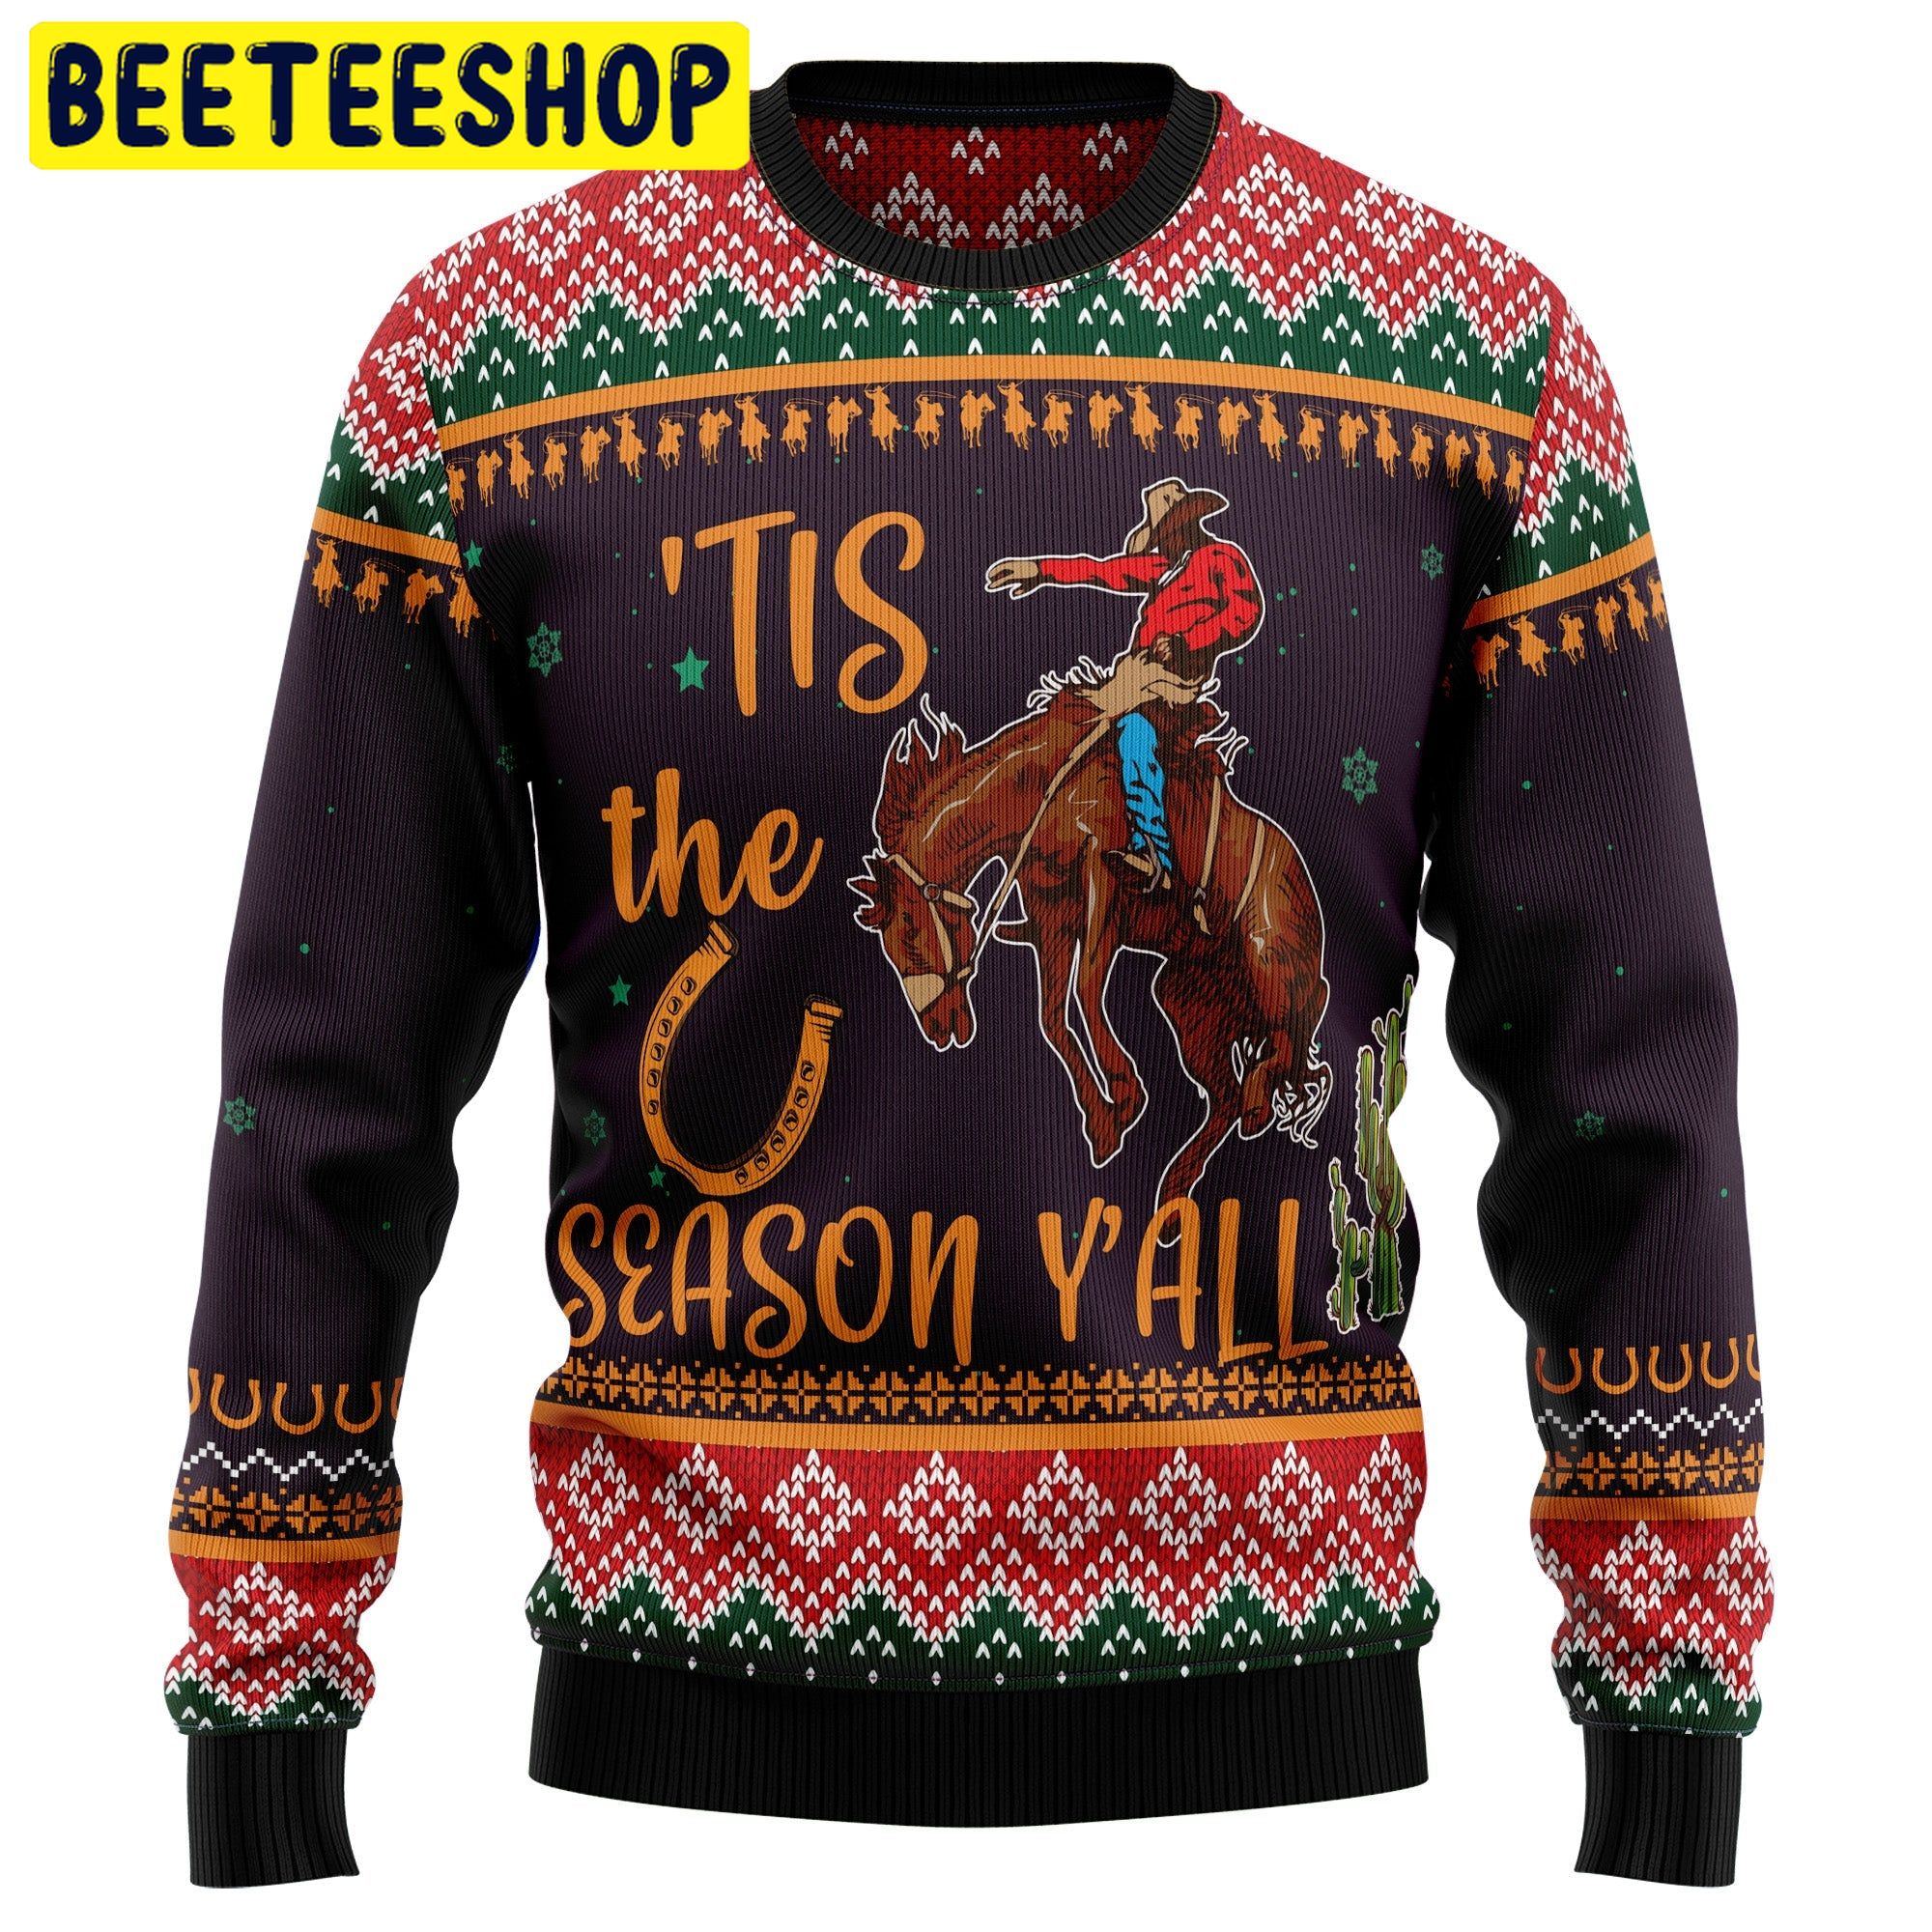 Tis The Season Y’all Cowboy Trending Ugly Christmas Sweatshirt